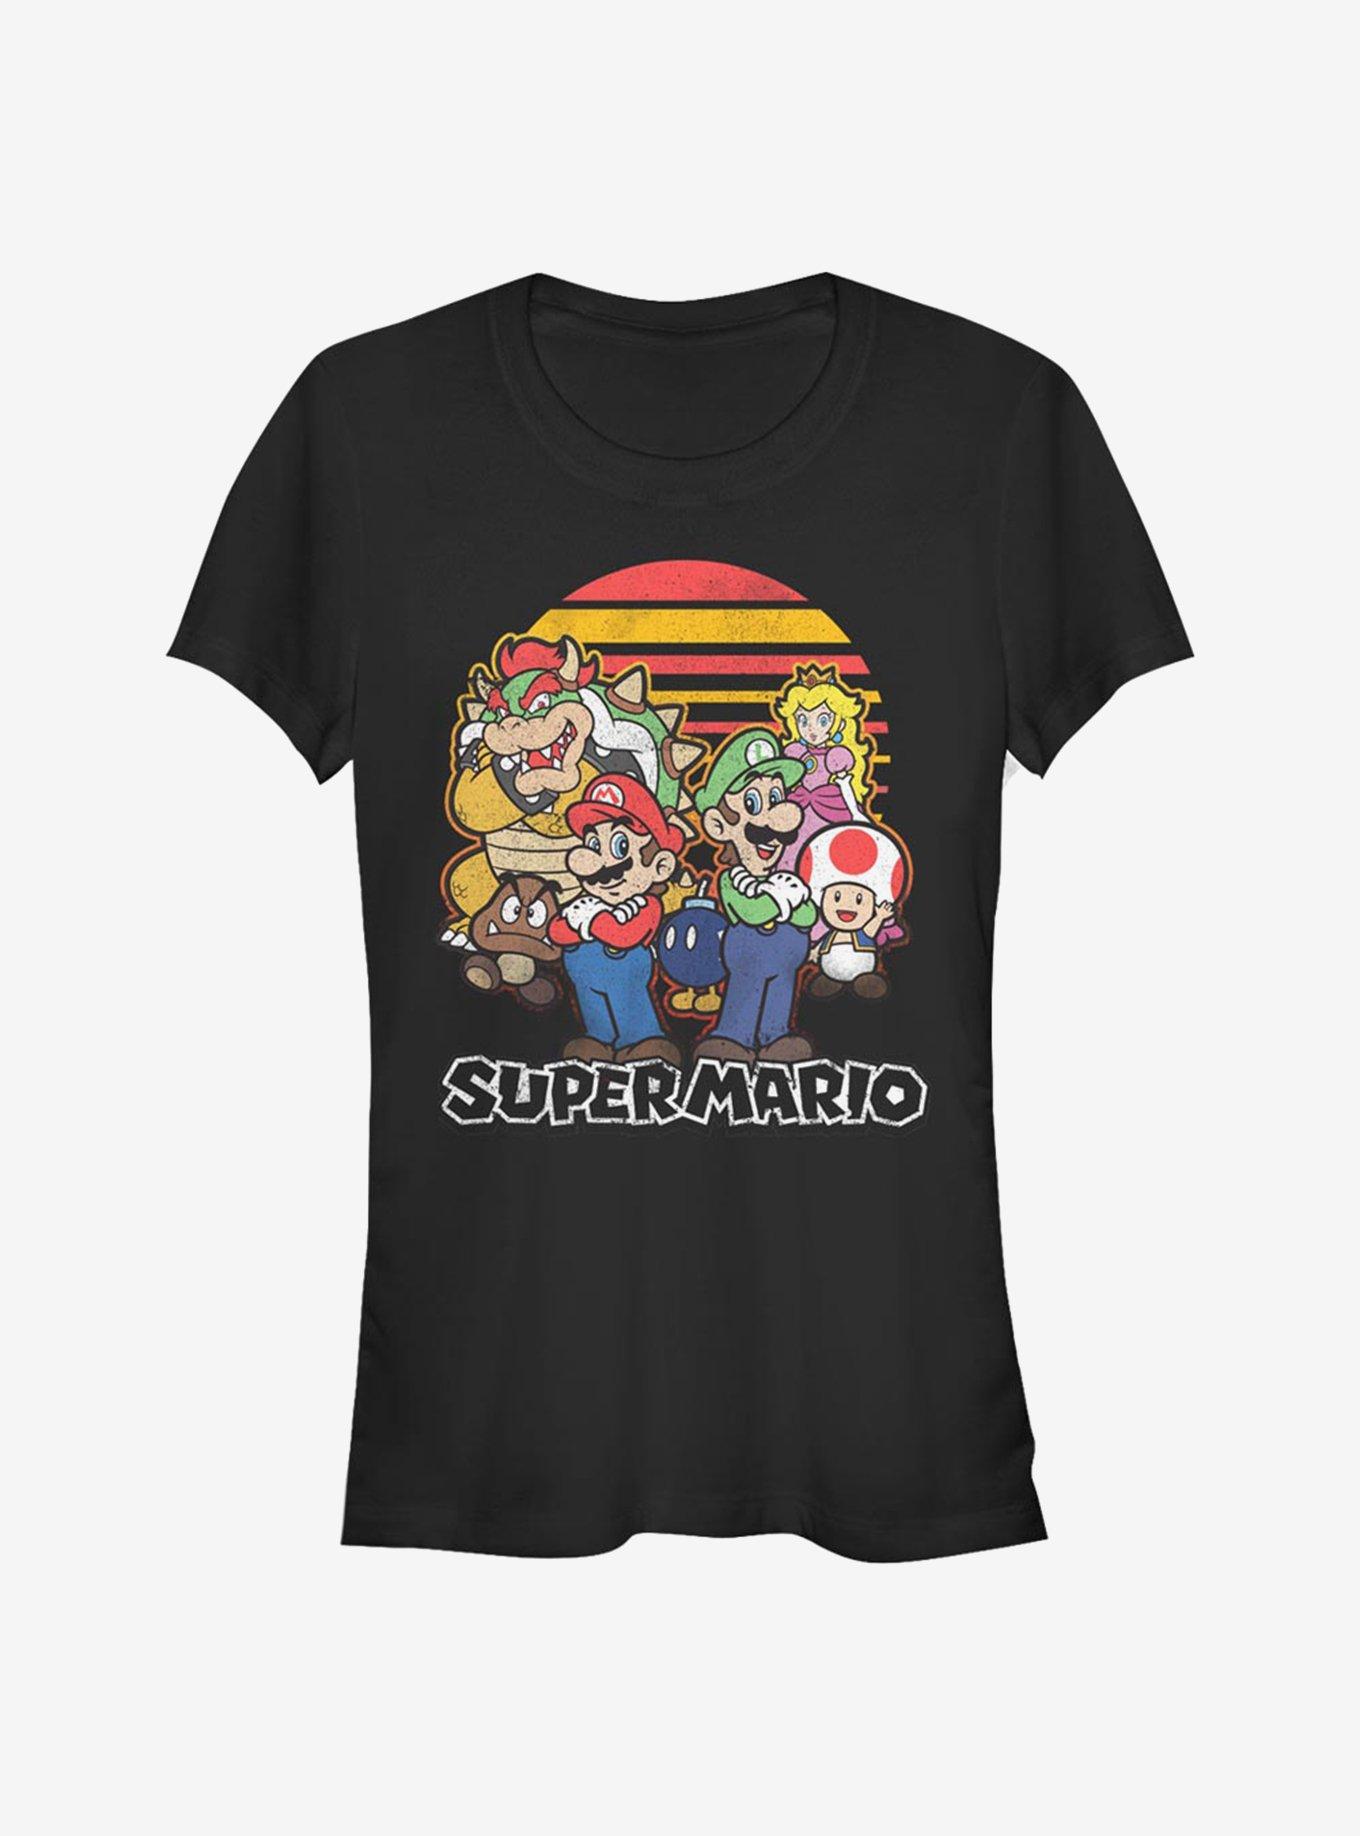 Super Mario Group Girls T-Shirt